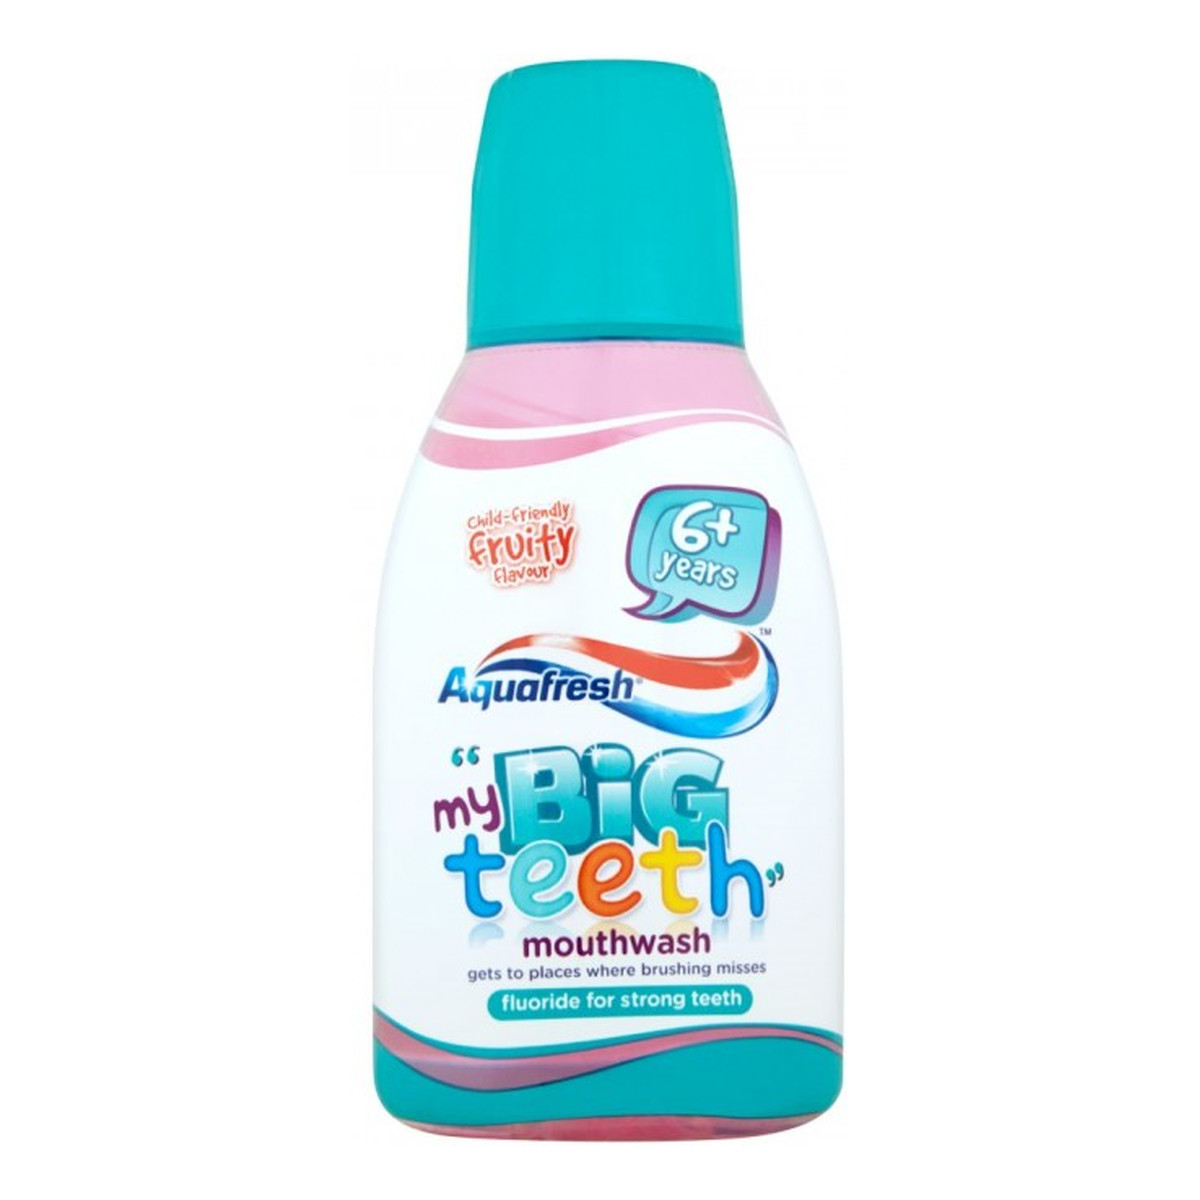 Aquafresh Big Teeth Płyn Do Płukania Dla Dzieci 300ml